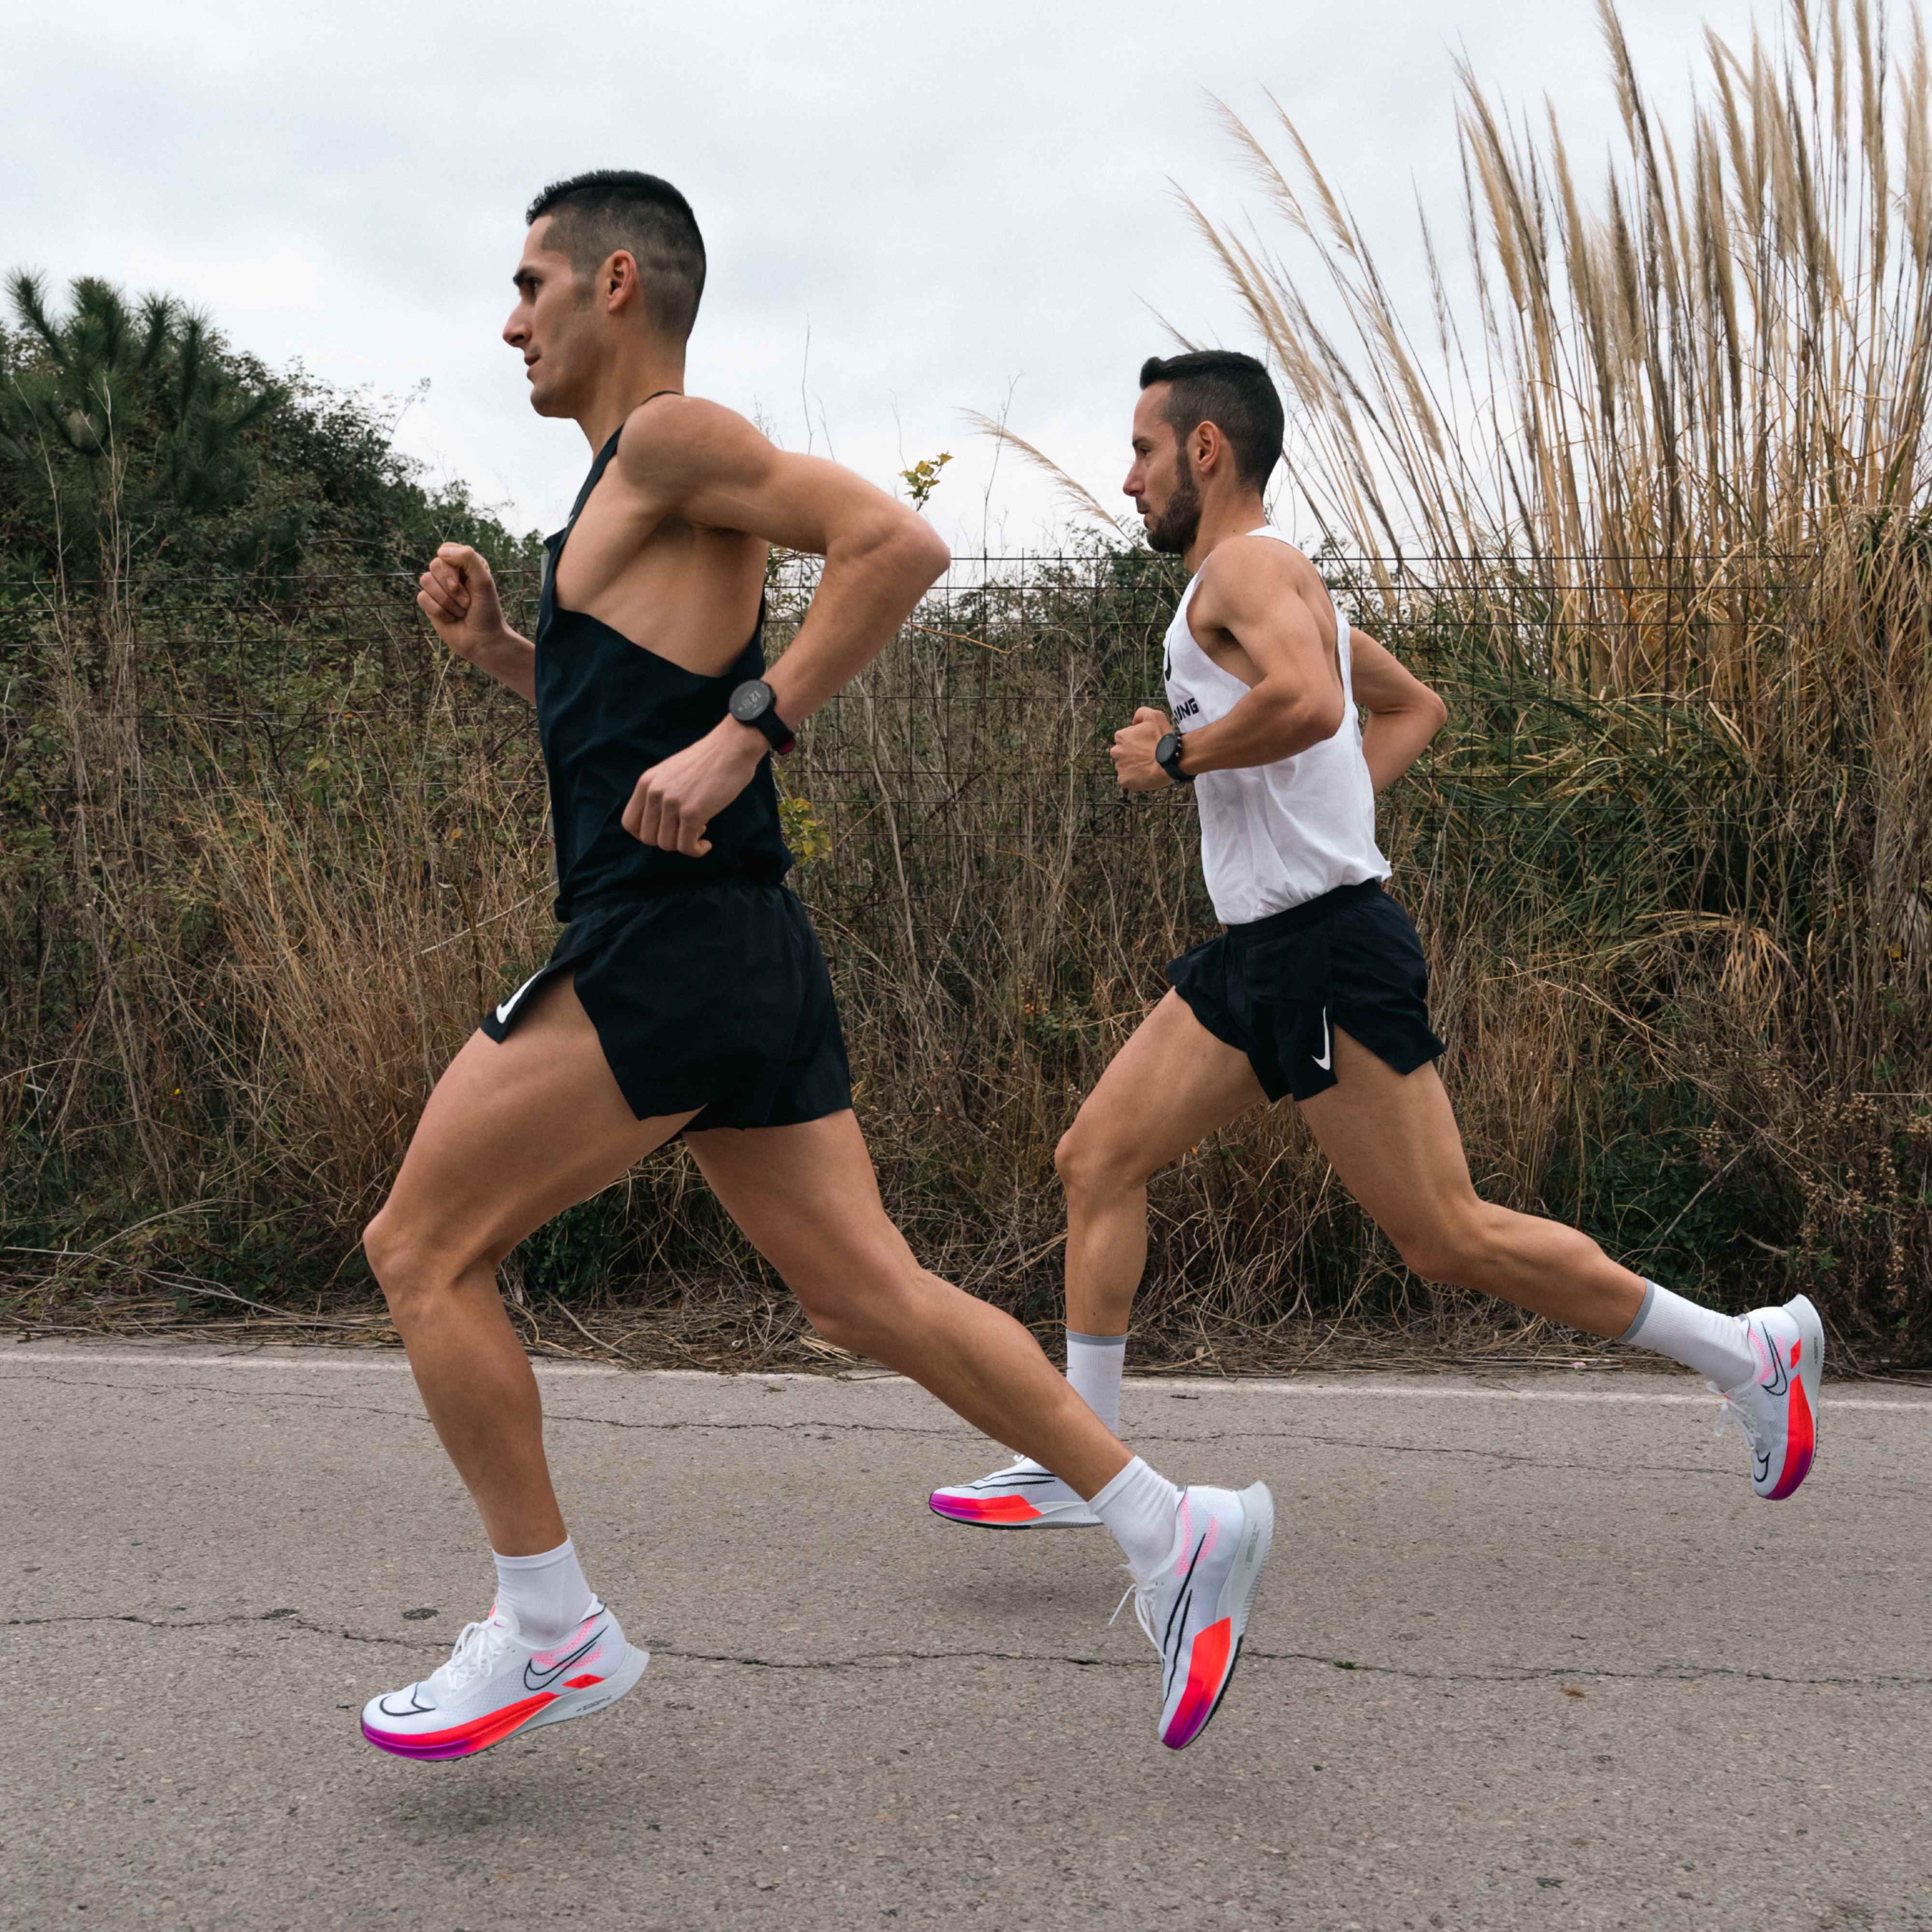 Sensual Nike Alphafly Images Captivate Athletes and Non-Athletes Alike